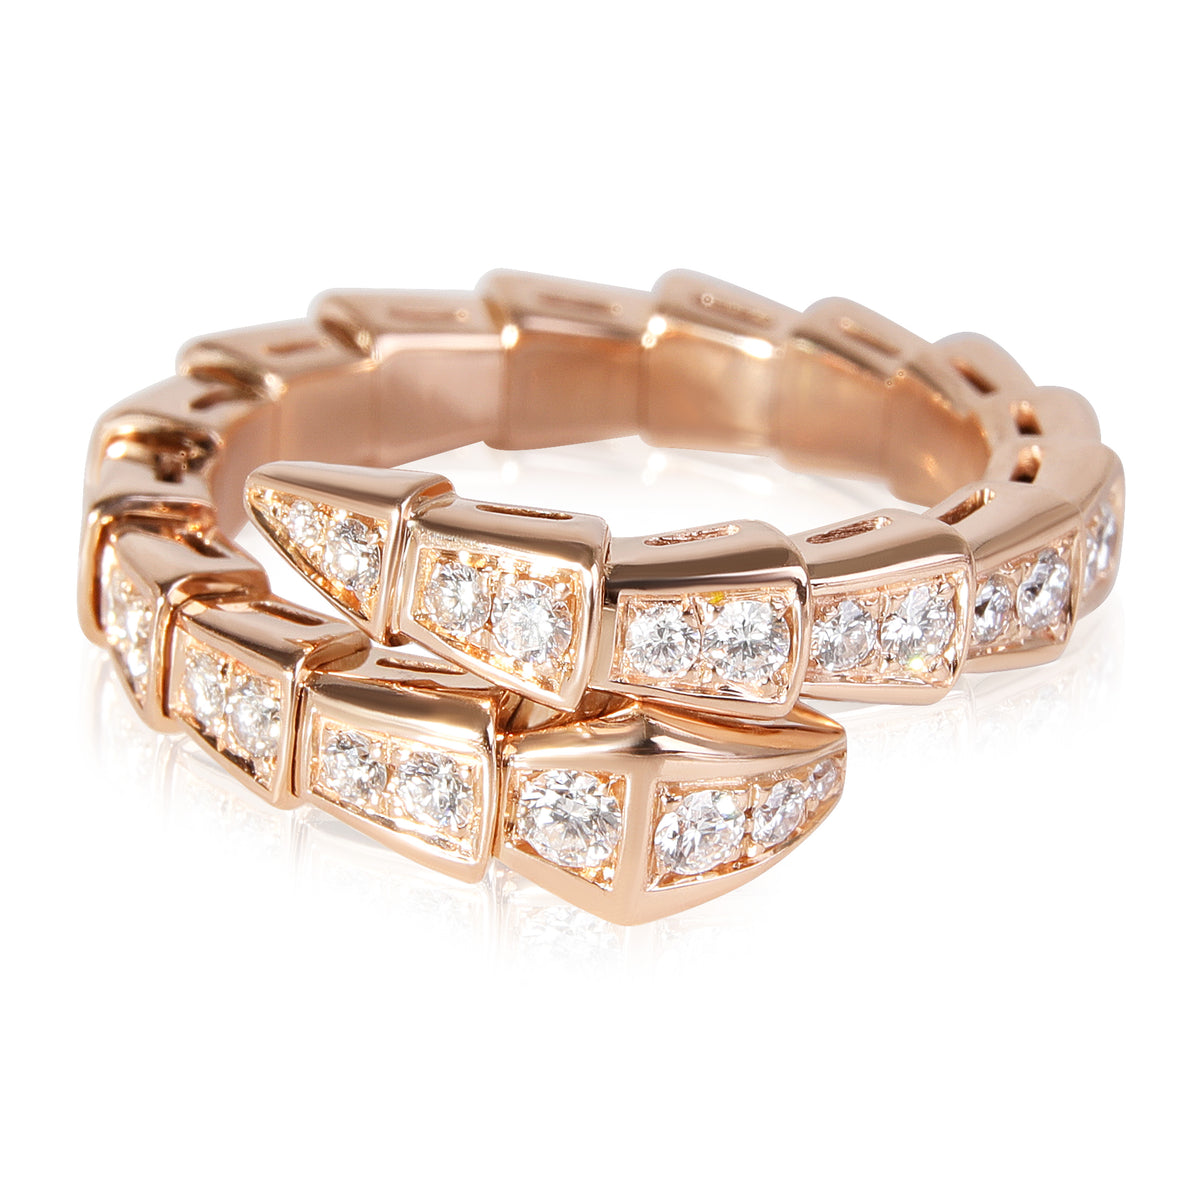 BVLGARI Serpenti Diamond Ring in 18K Rose Gold 0.66 CTW